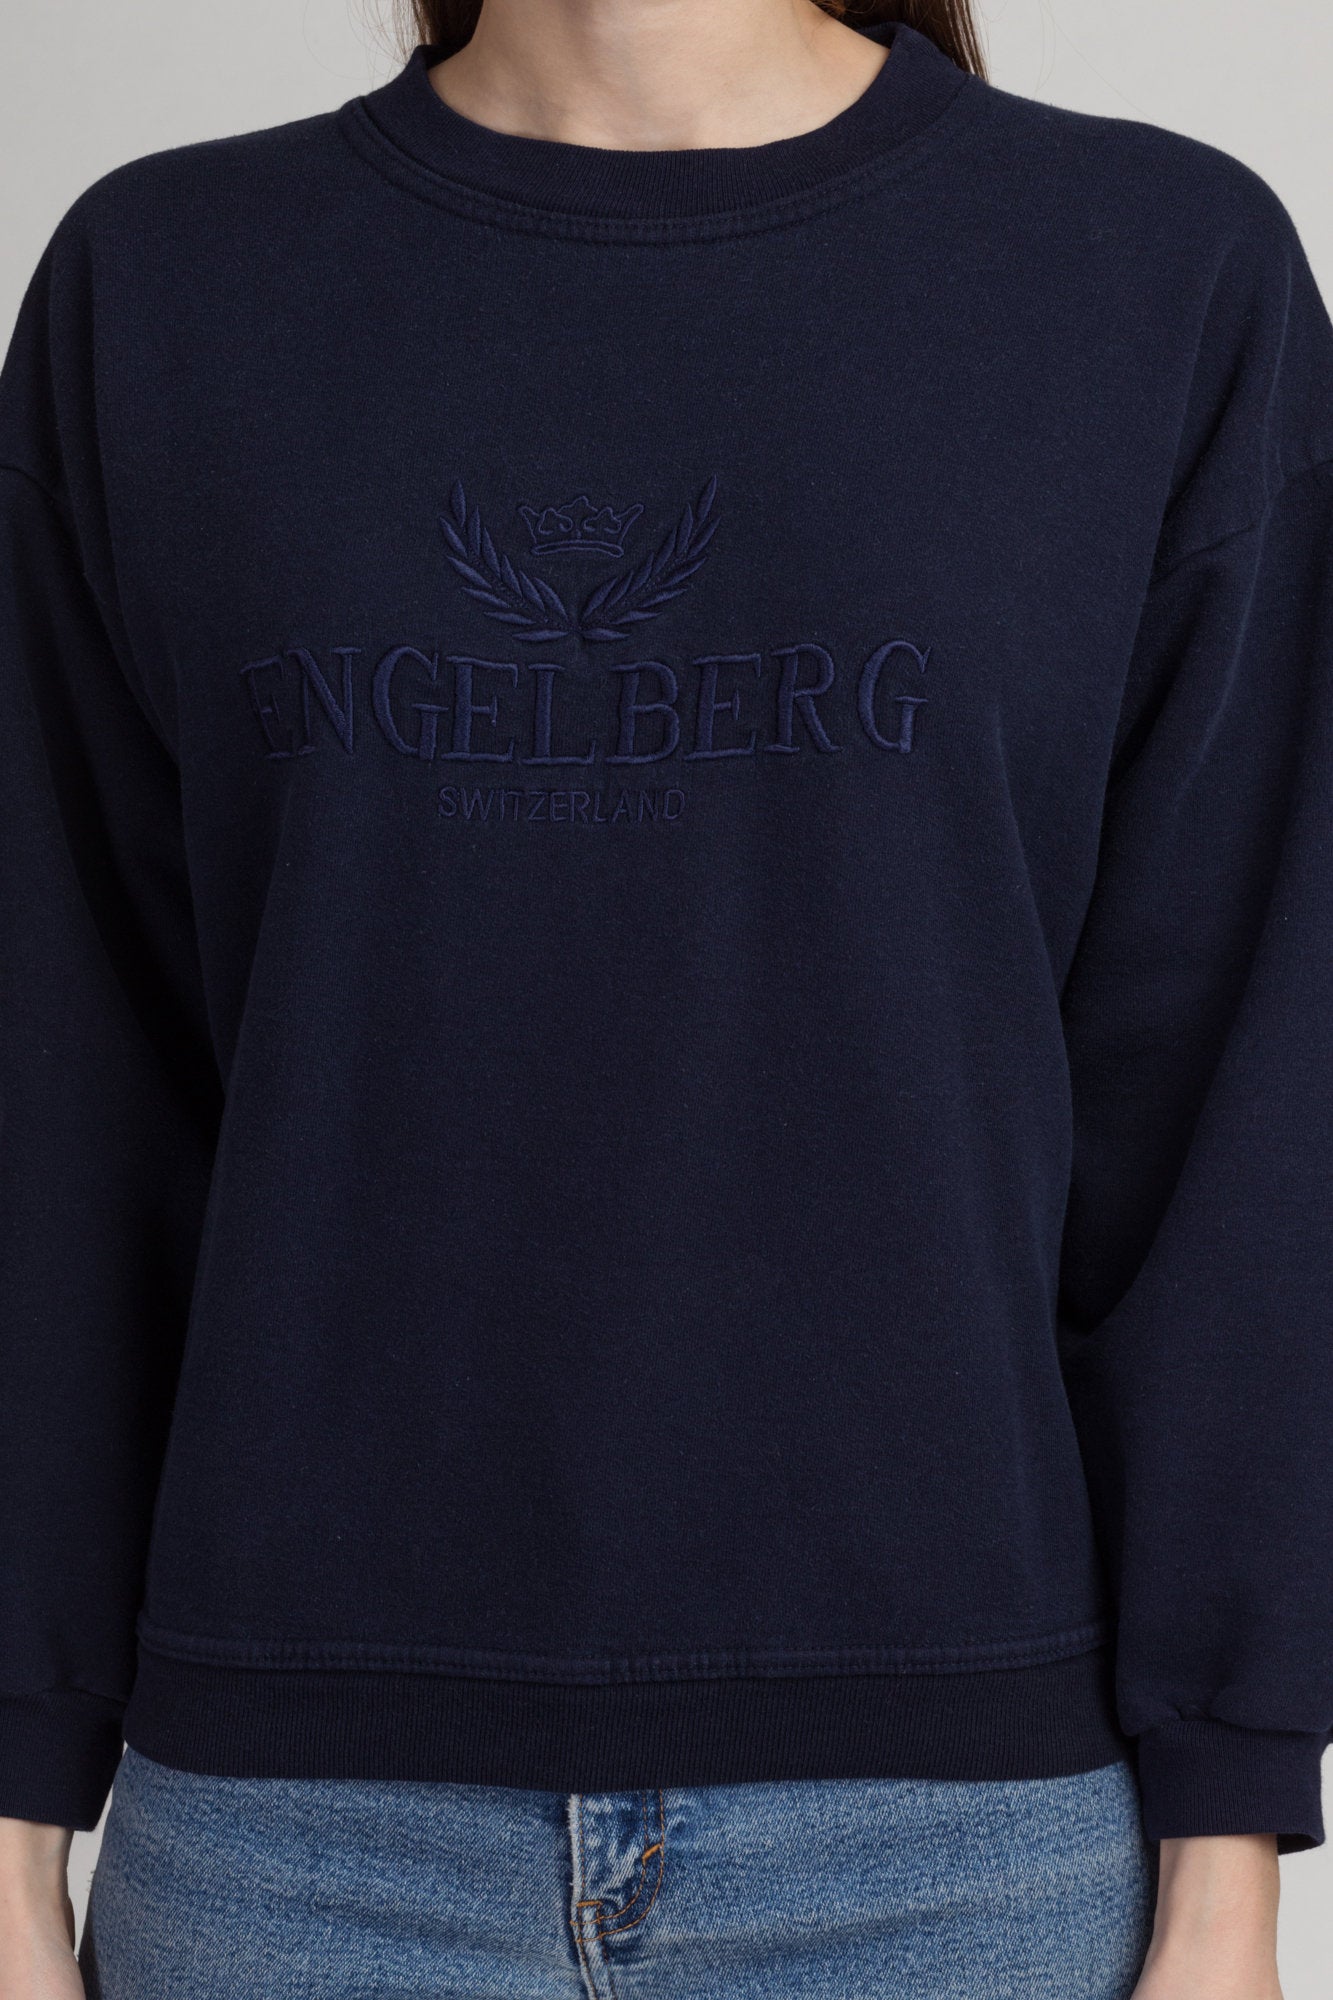 Vintage Engelberg Switzerland Sweatshirt - Petite Large | 90s Navy Blue Ski Resort Graphic Tourist Pullover